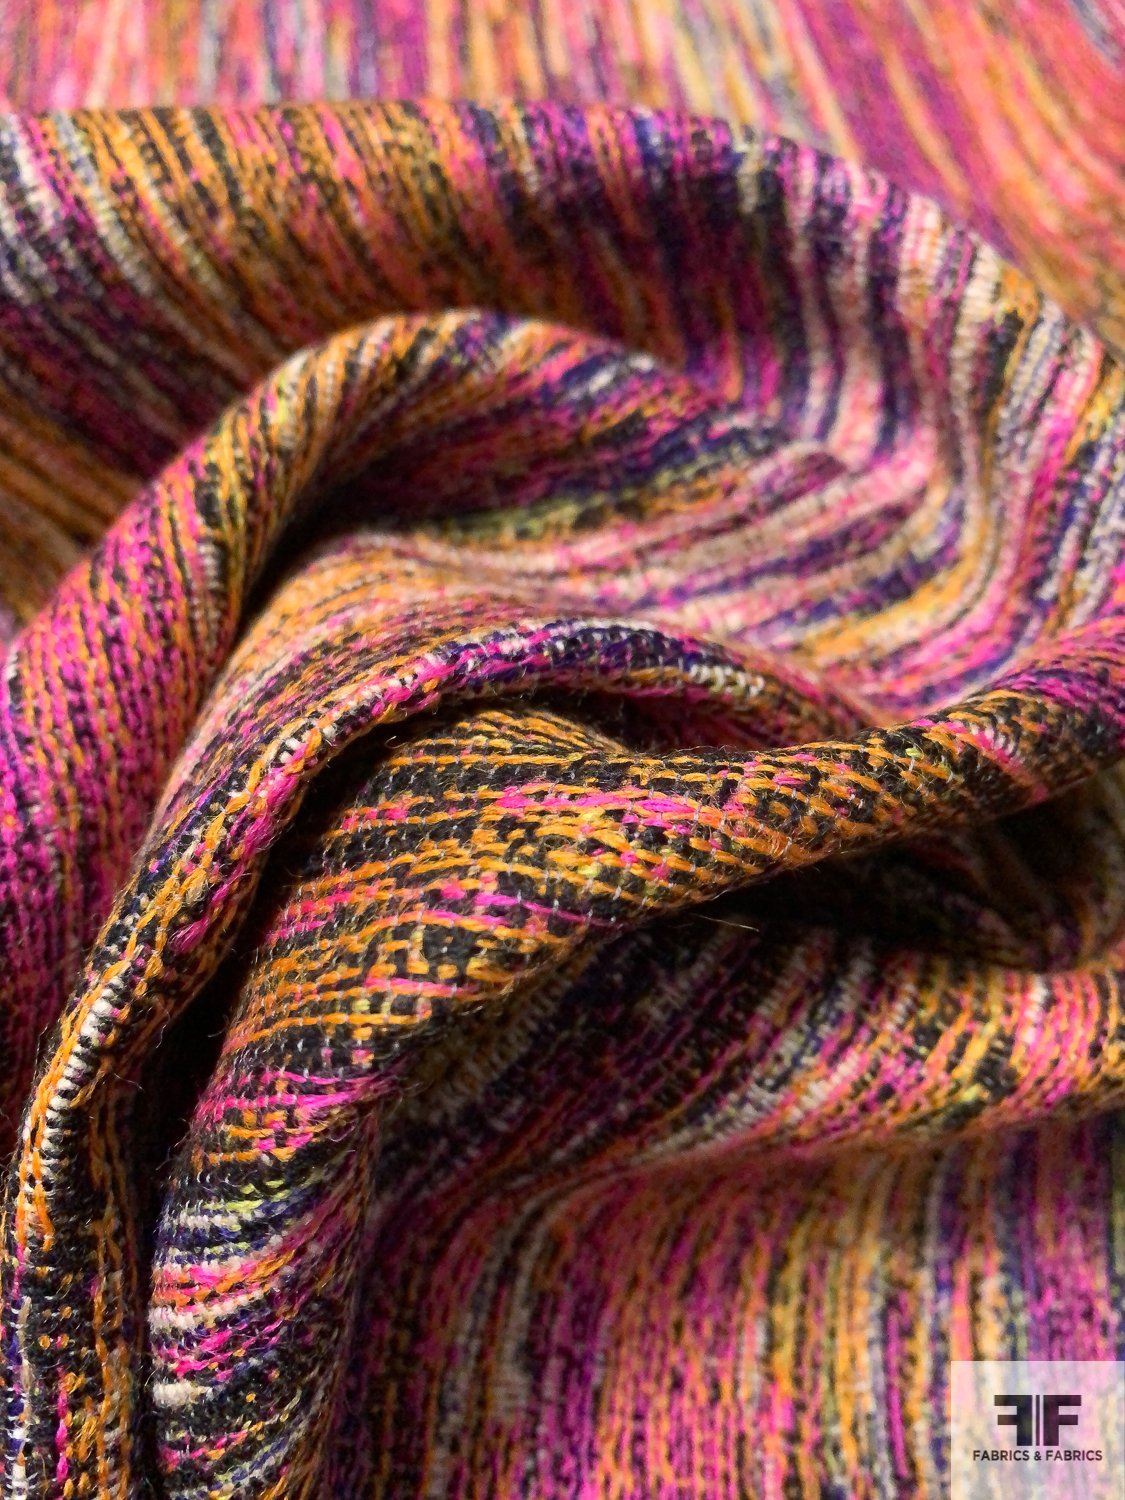 Italian Tightly Woven Novelty Virgin Wool Blend - Multicolor / Magenta